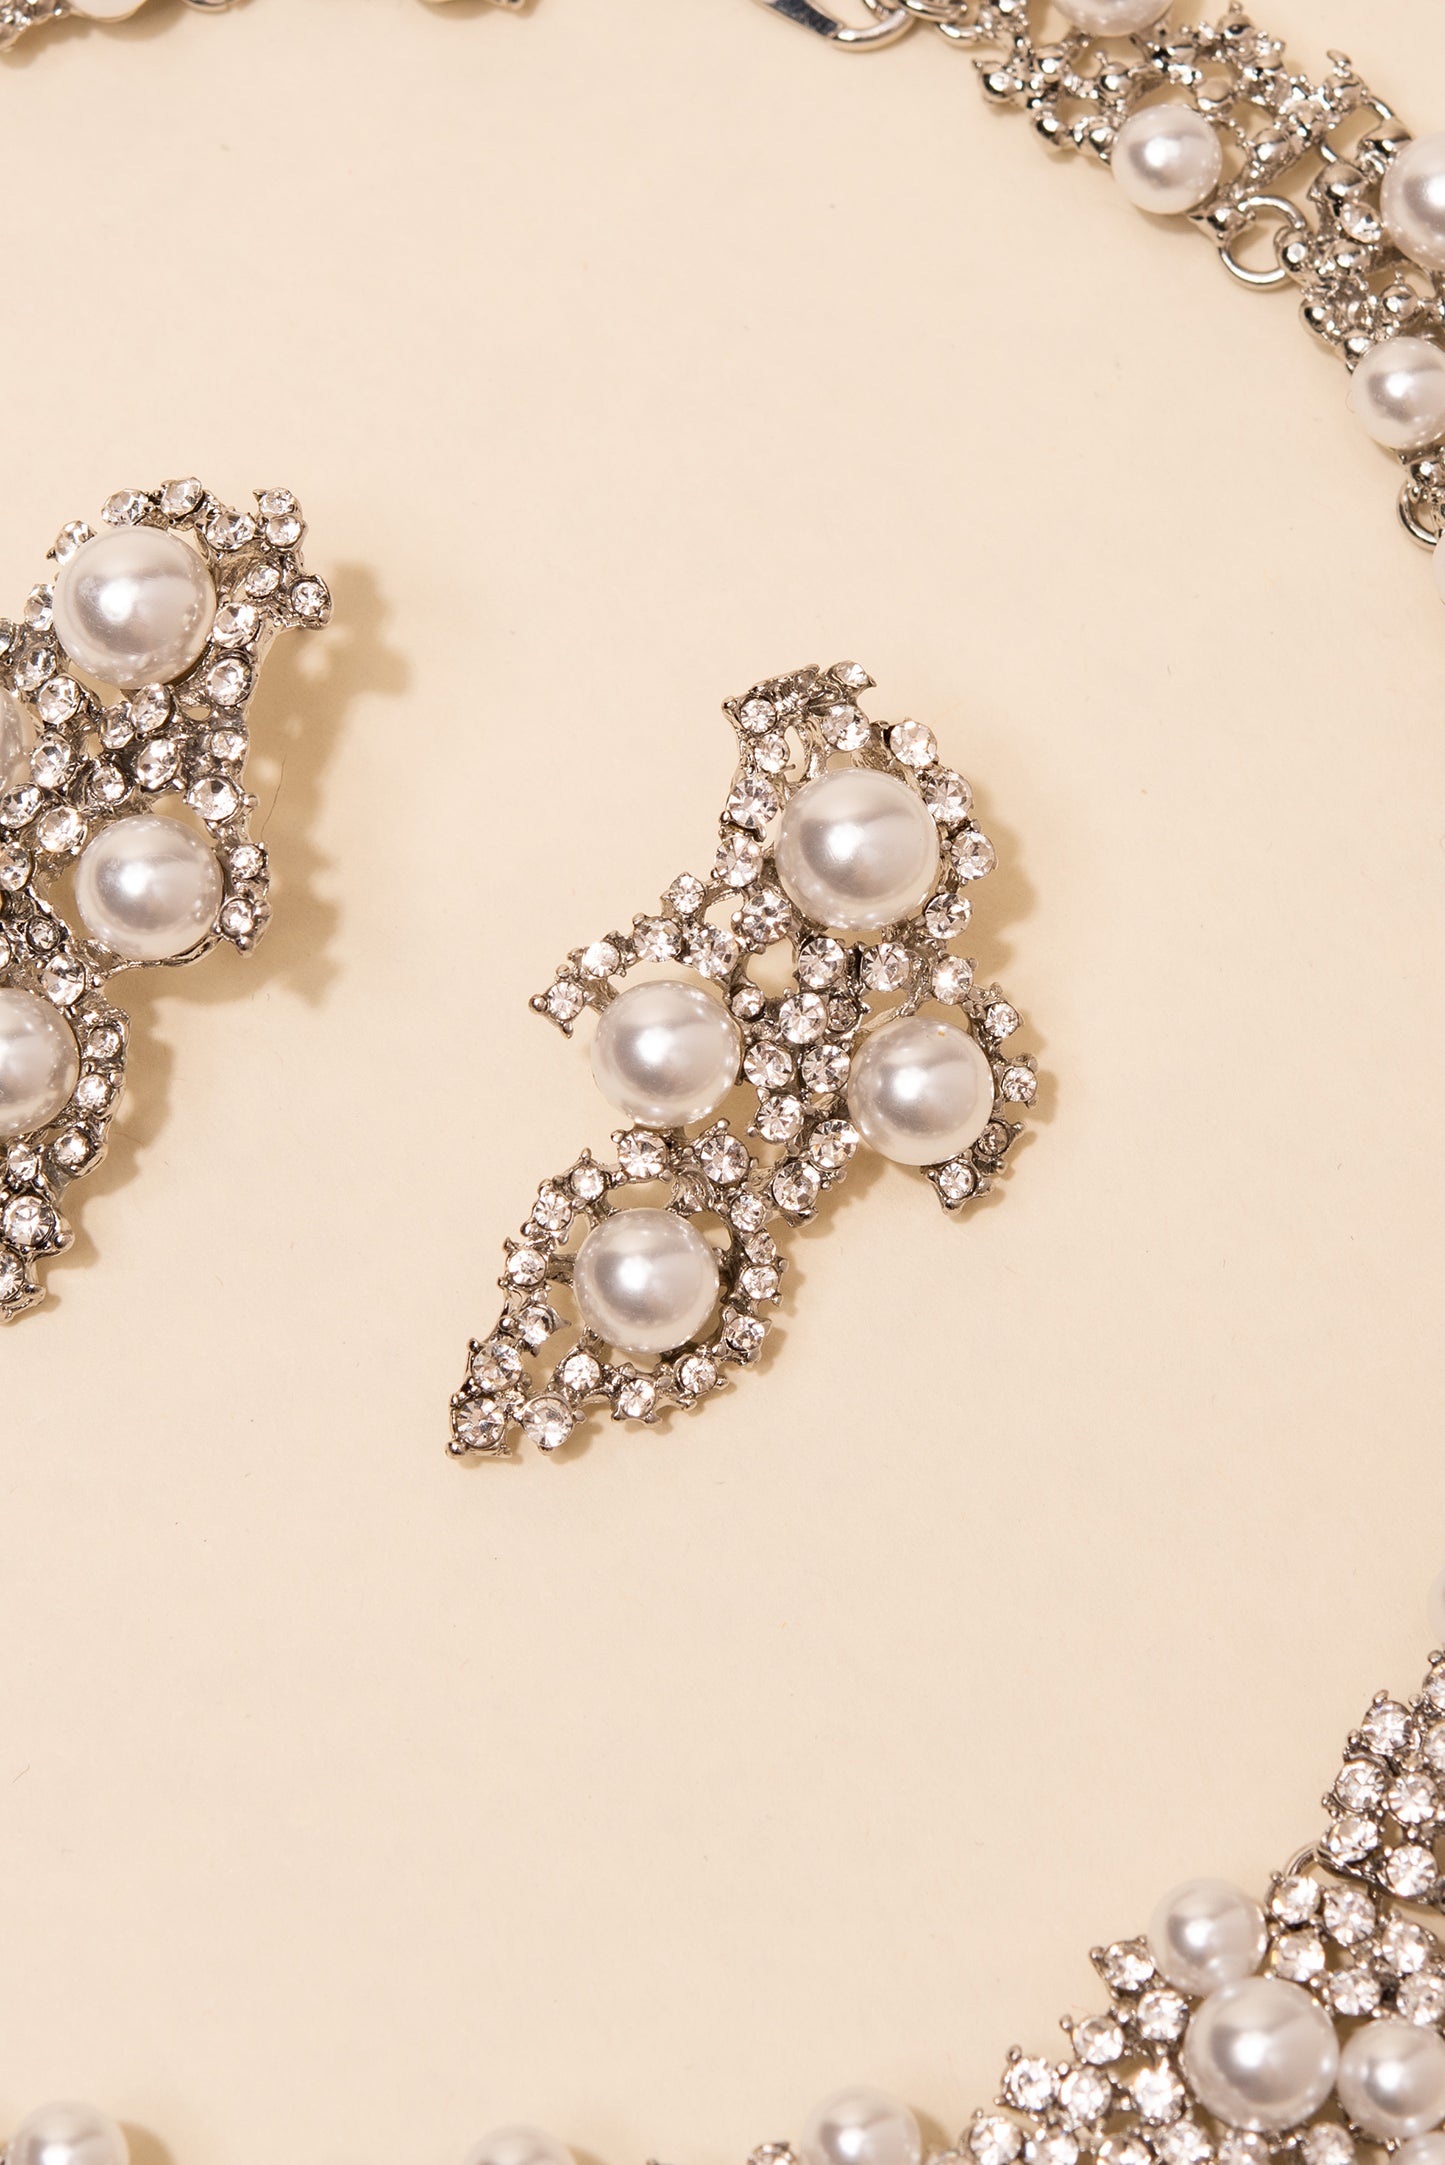 Donna Pearl & Rhinestone Embellished Bib Necklace & Earrings Set - Silver White